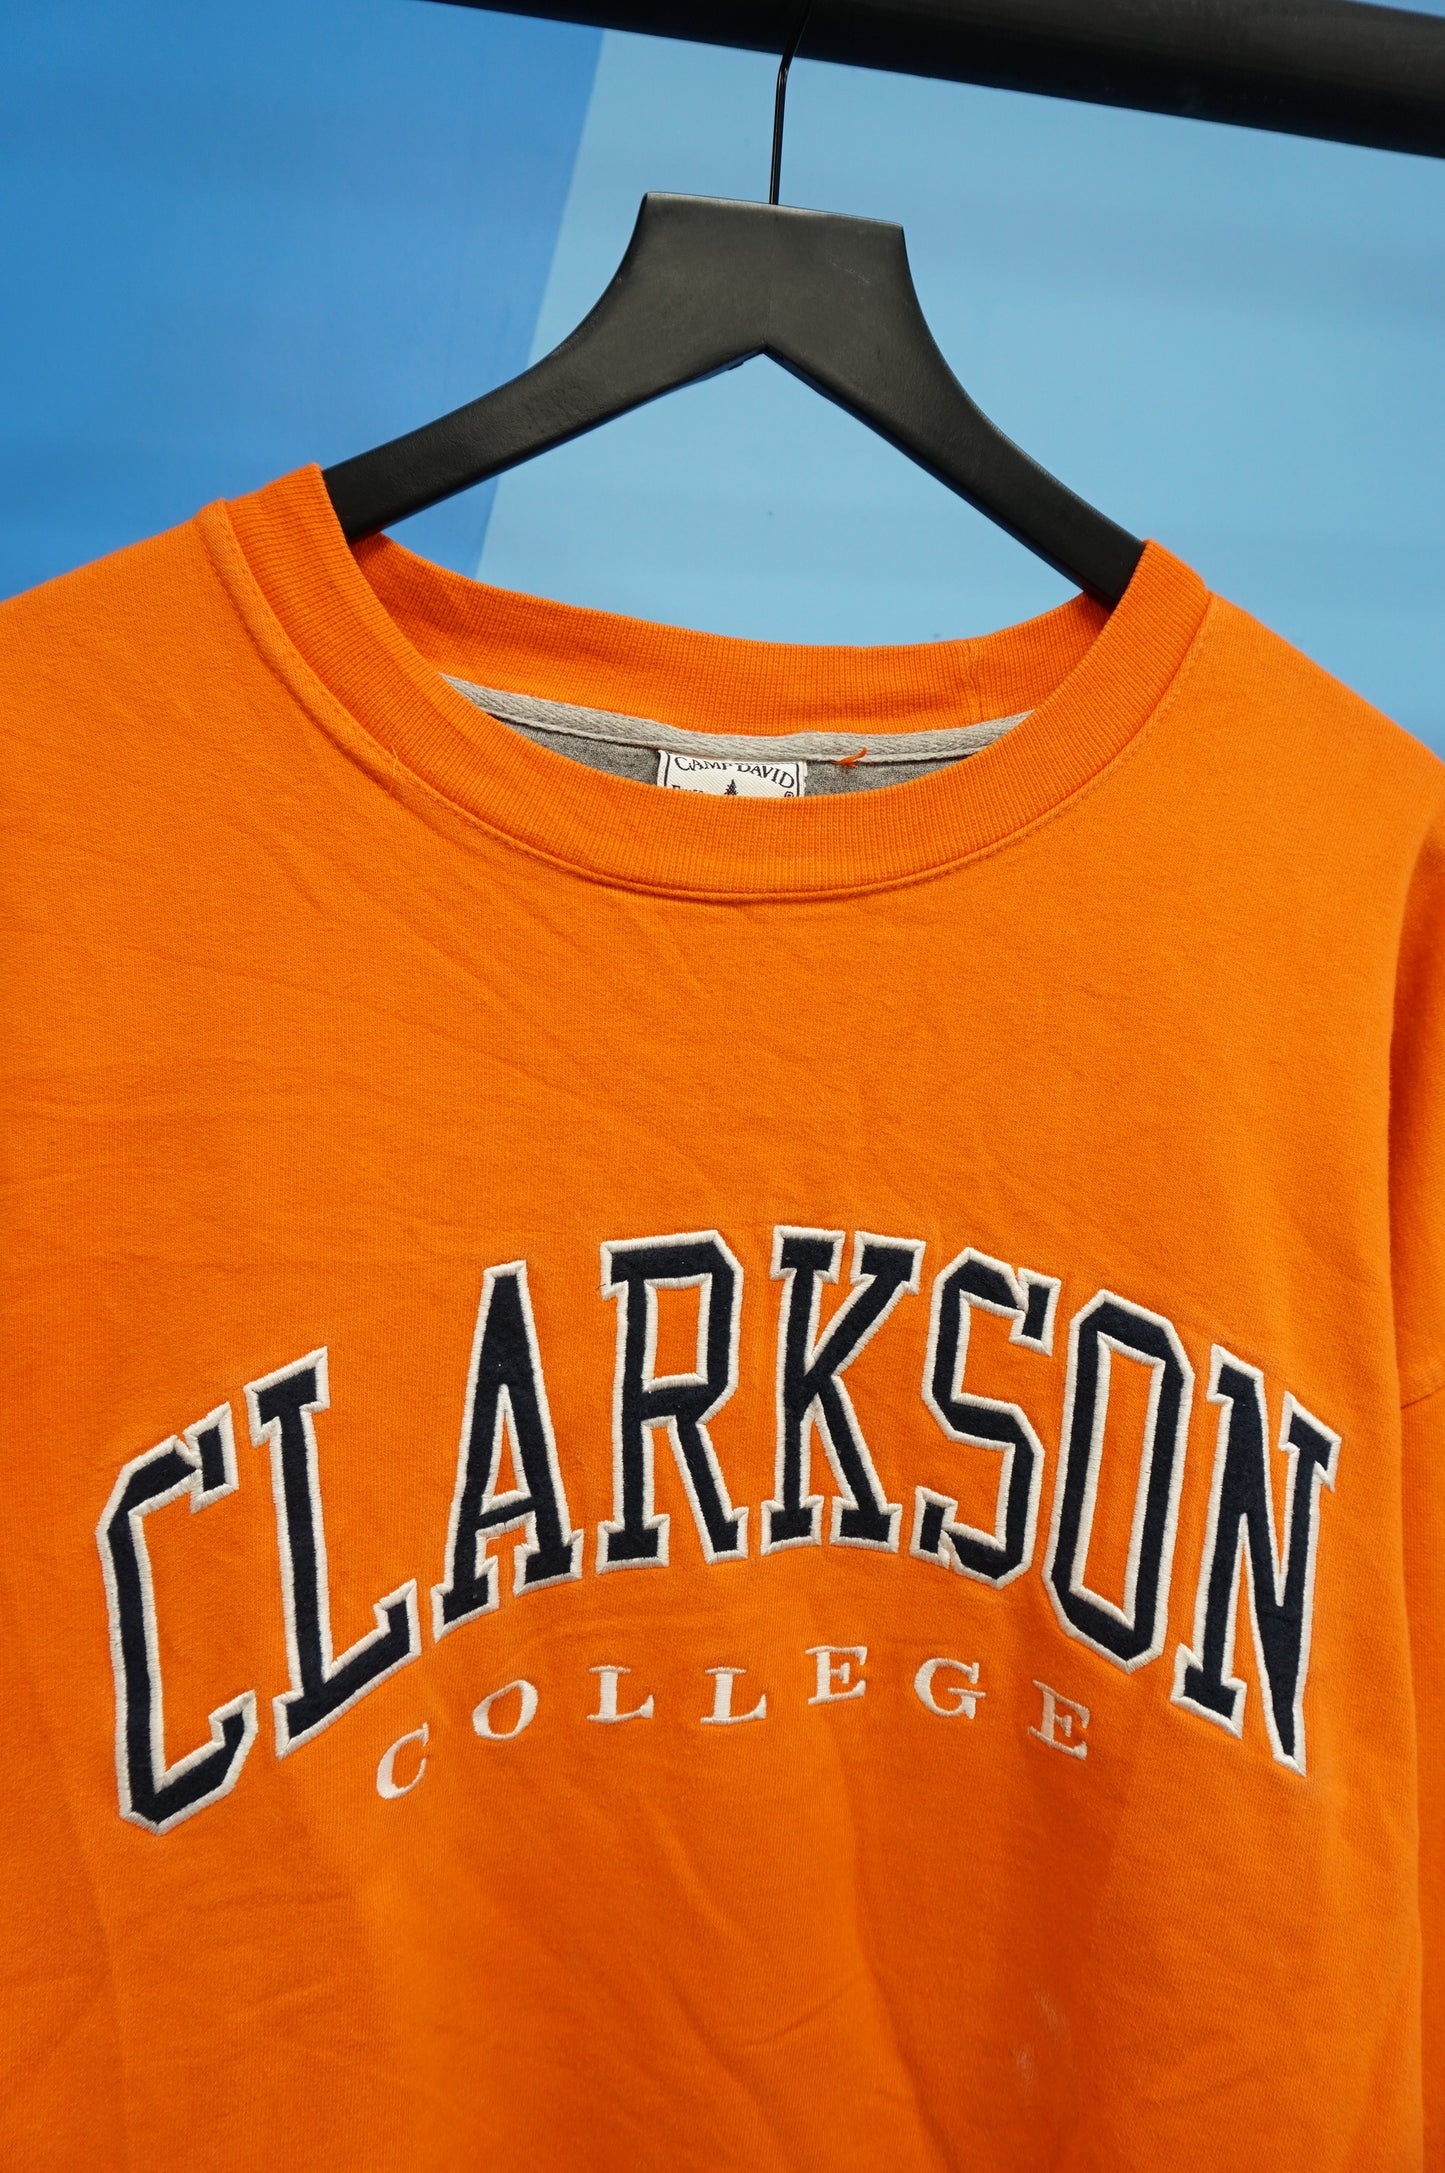 (XXL) Clarkson College Crewneck